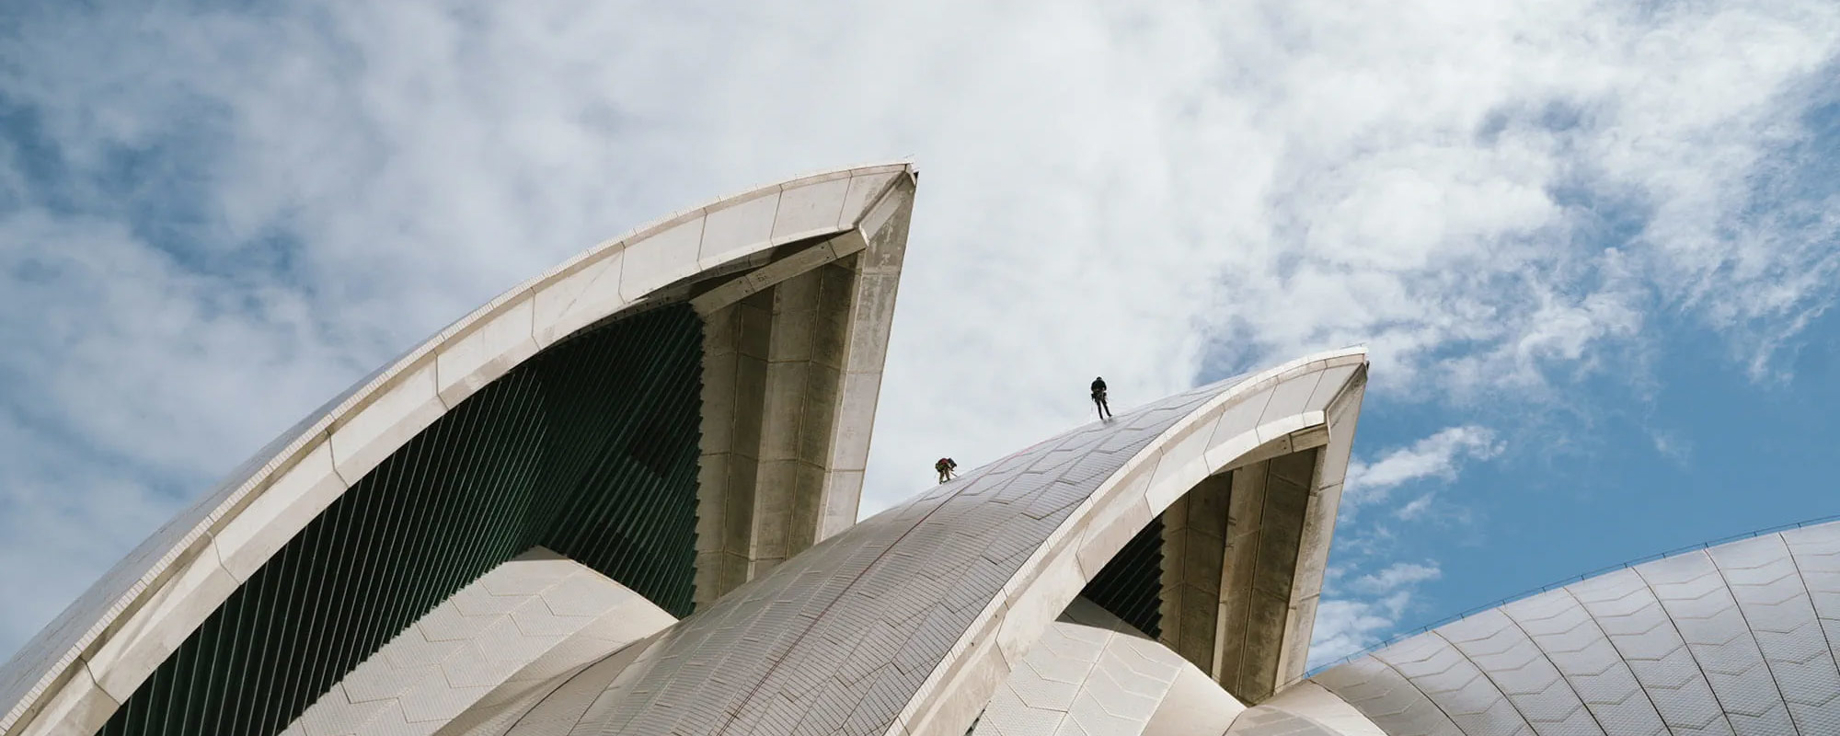 Sydney Opera House inspection of roof underway